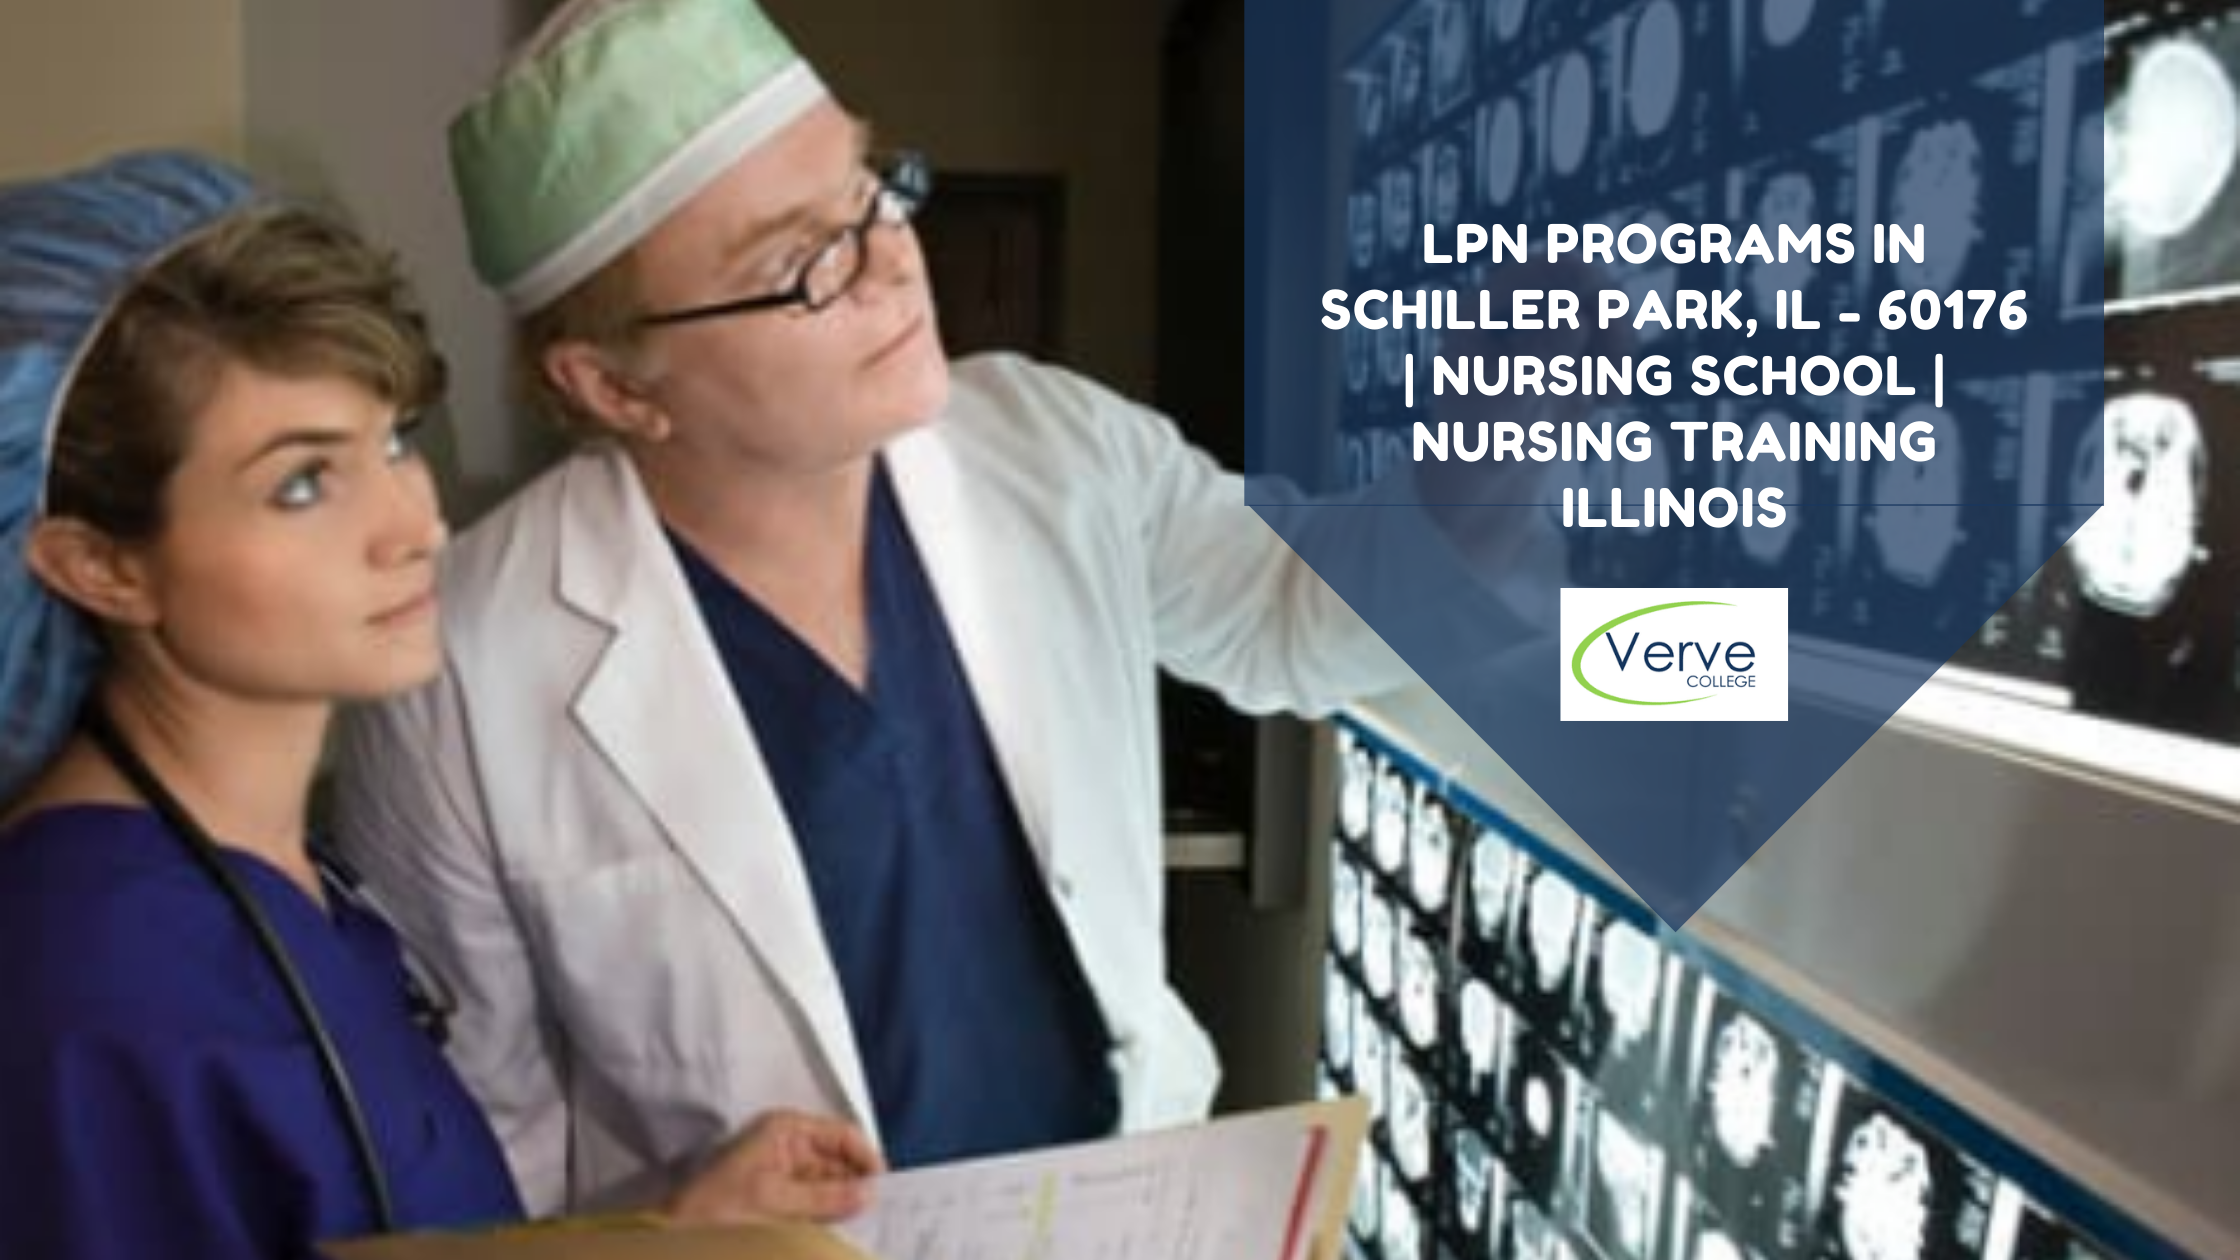 LPN Programs in Schiller Park, IL – 60176 | Nursing School | Nursing Training Illinois